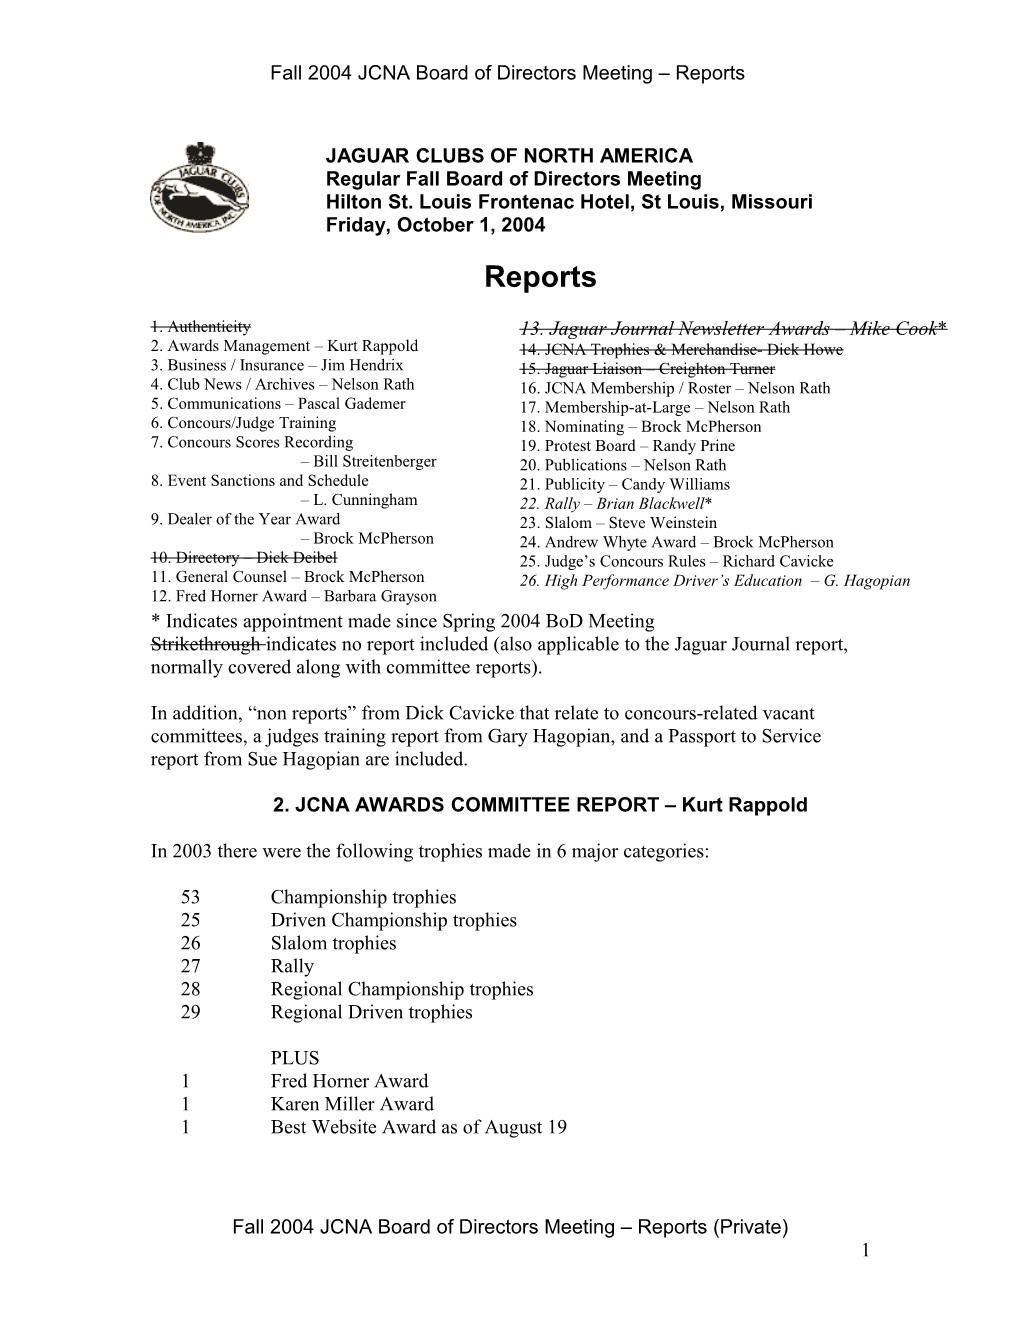 Fall 2004 JCNA Board of Directors Meeting Reports